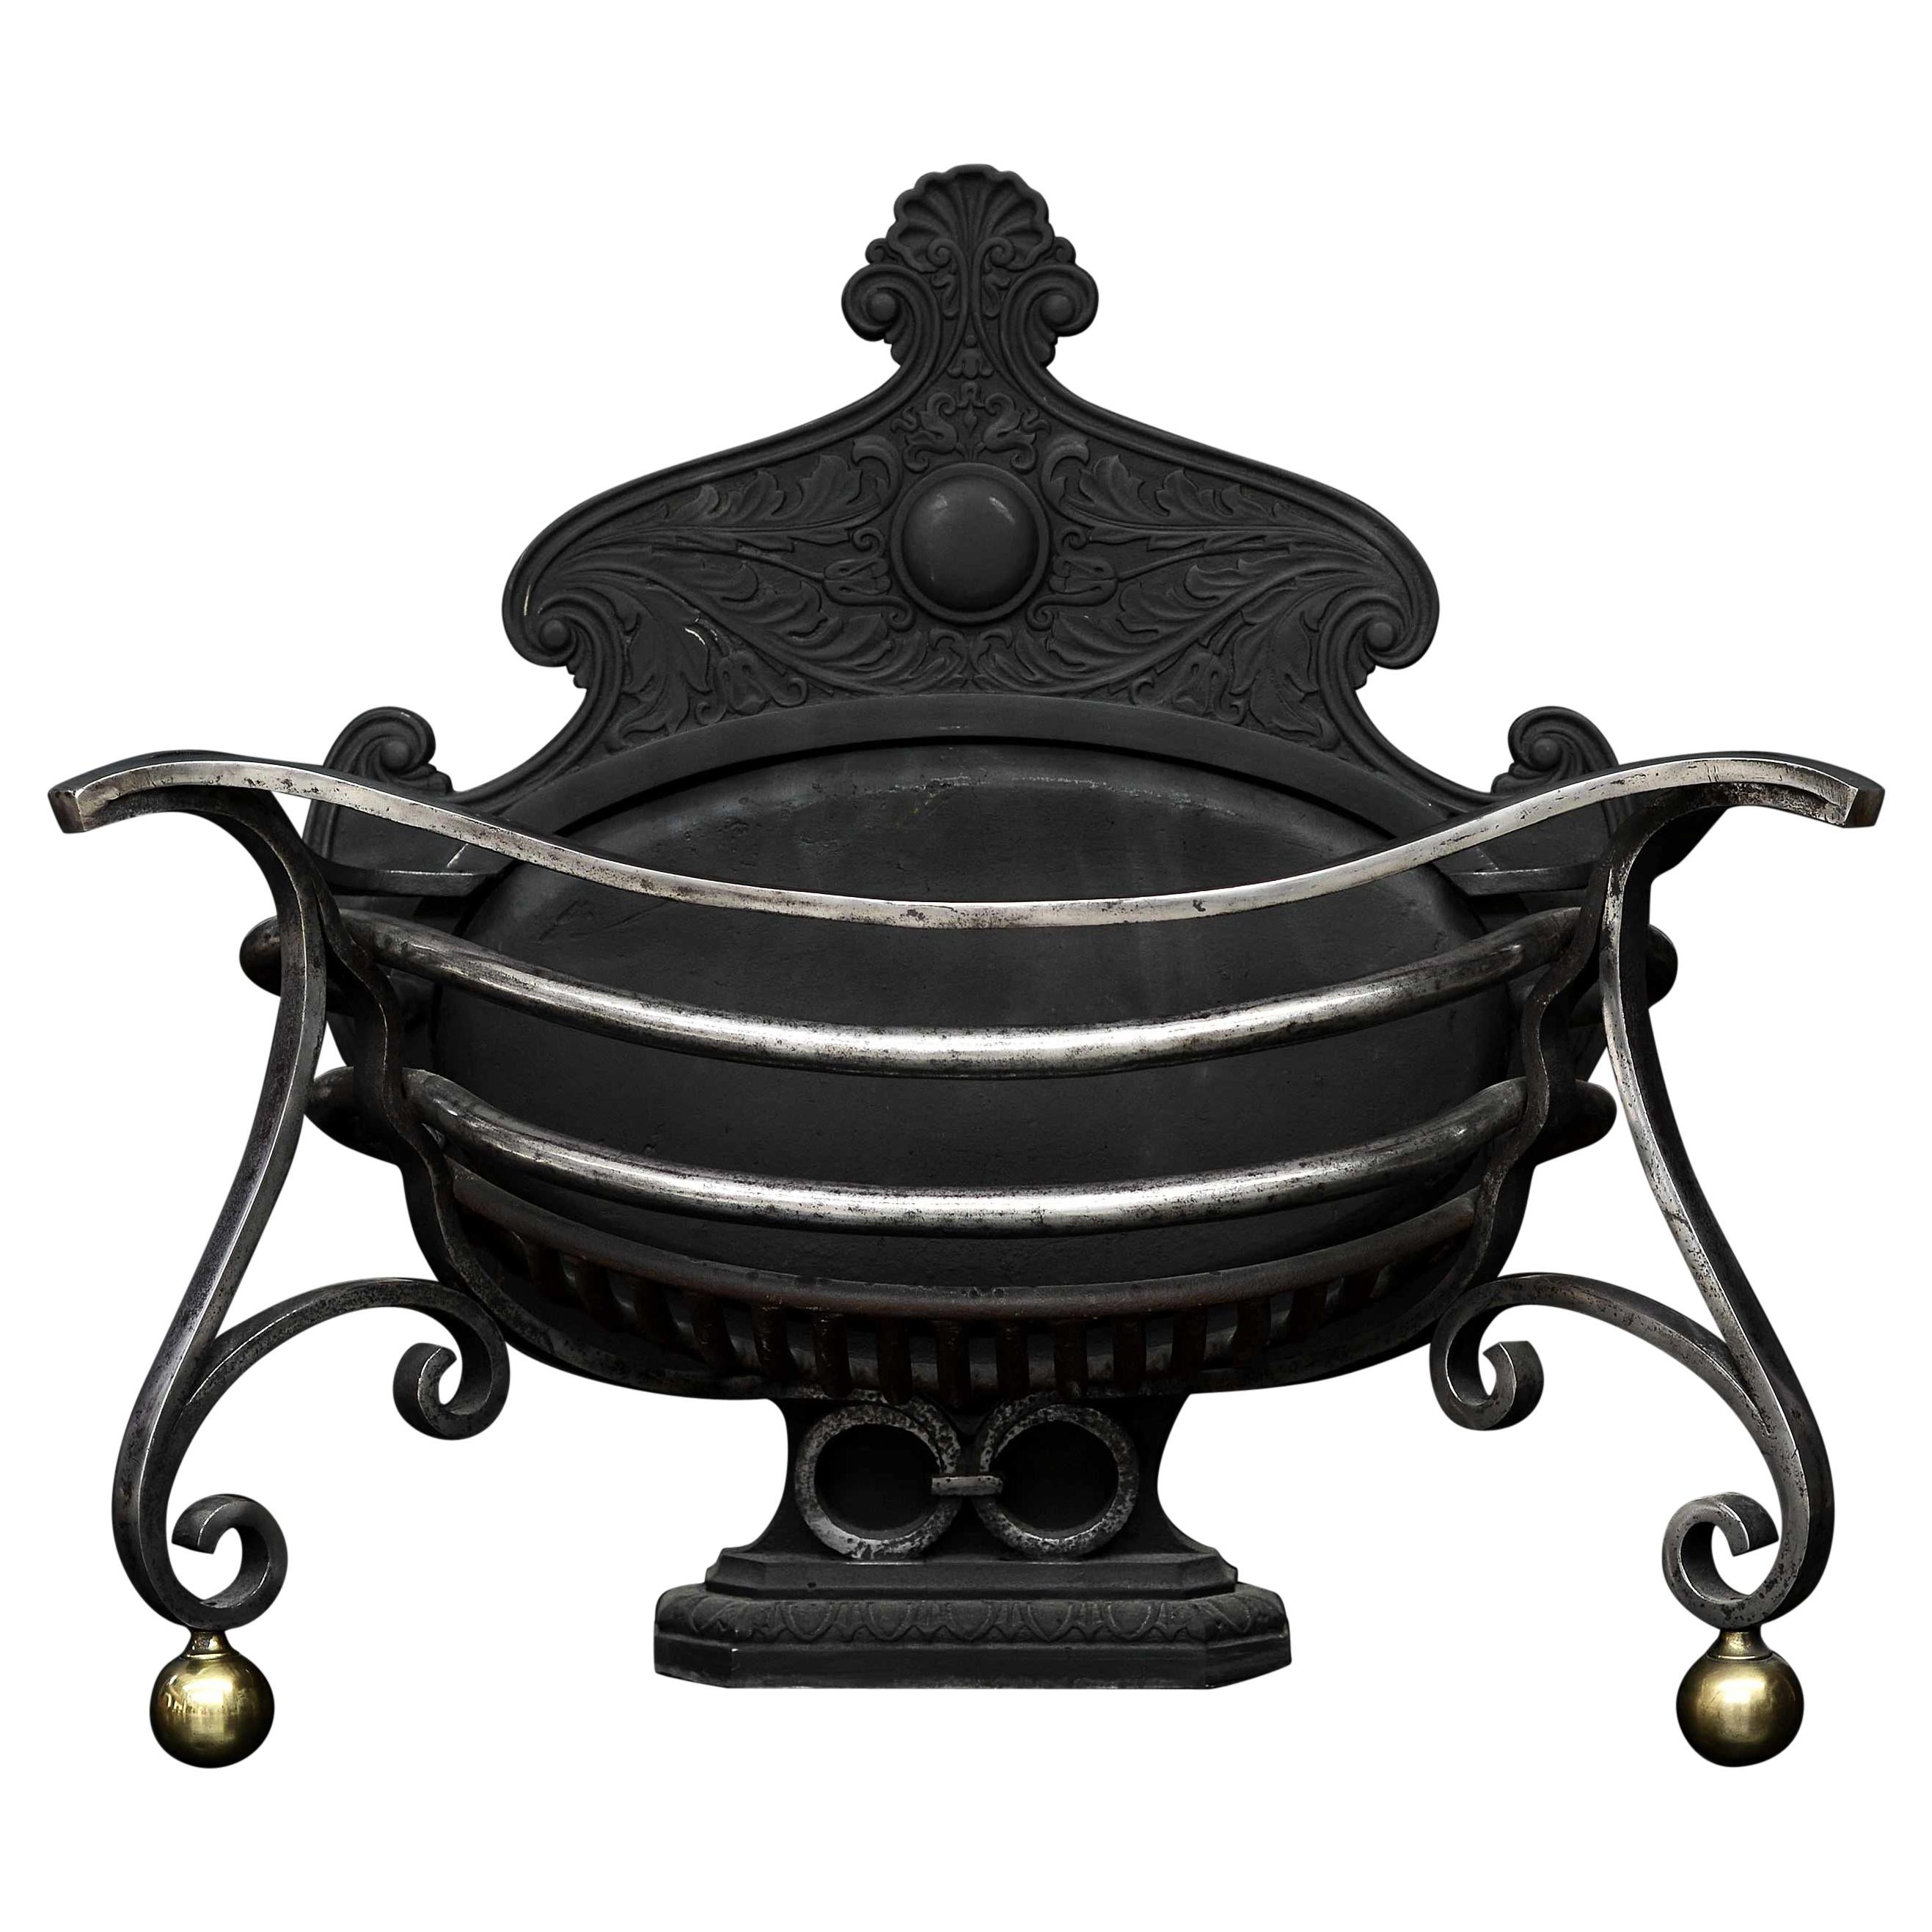 Unusual Shaped Art Nouveau Wrought Iron Firebasket For Sale